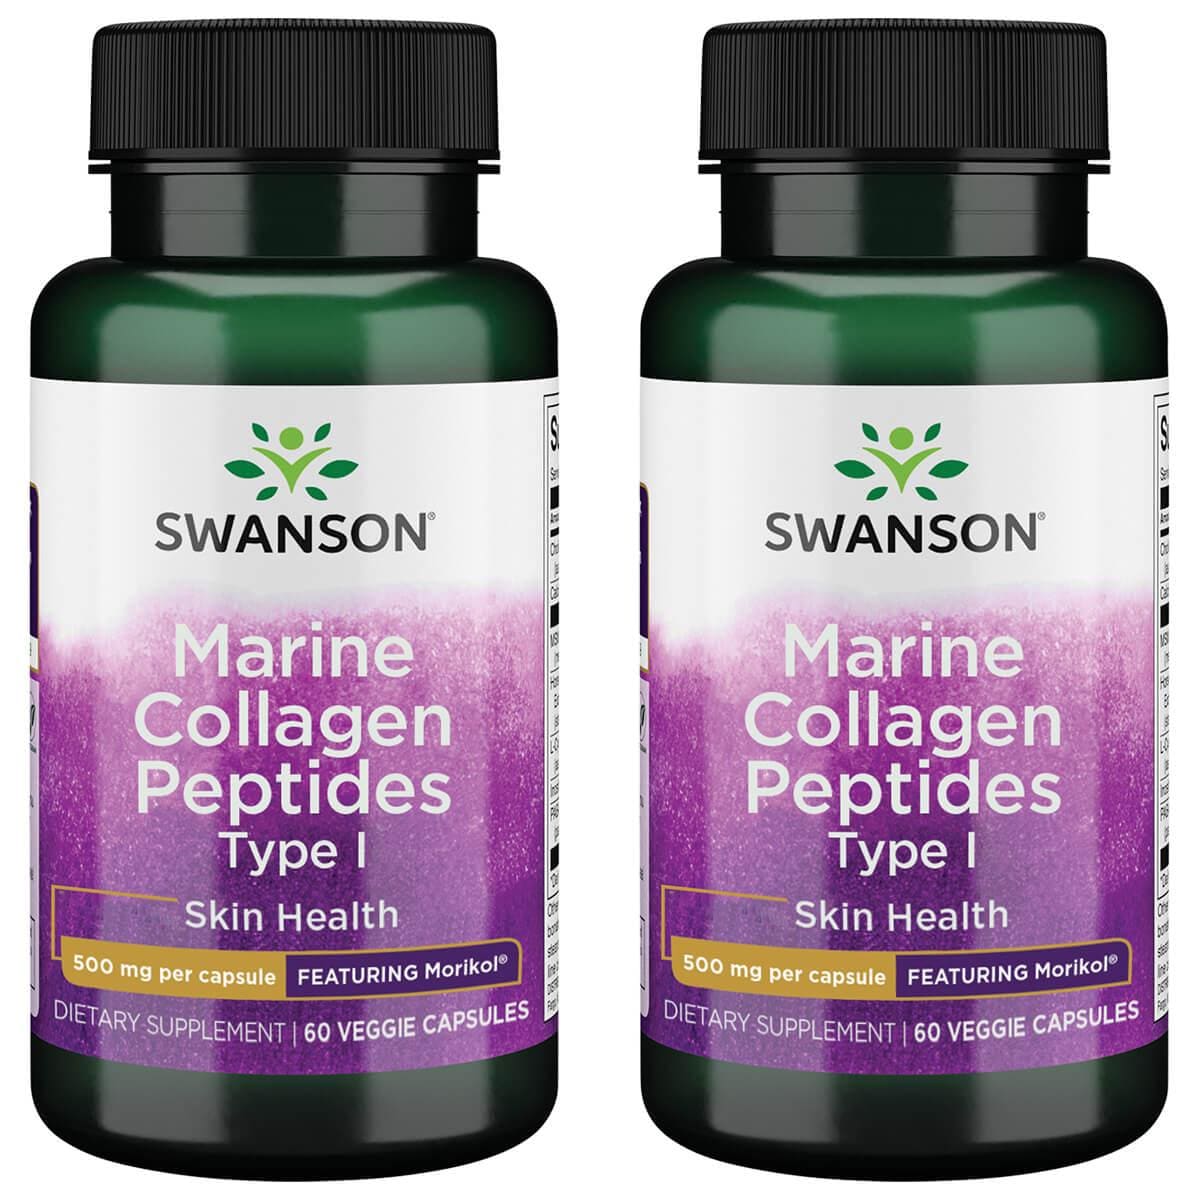 Swanson Premium Marine Collagen Peptides Type I - Featuring Morikol 2 Pack Supplement Vitamin 500 mg 60 Veg Caps